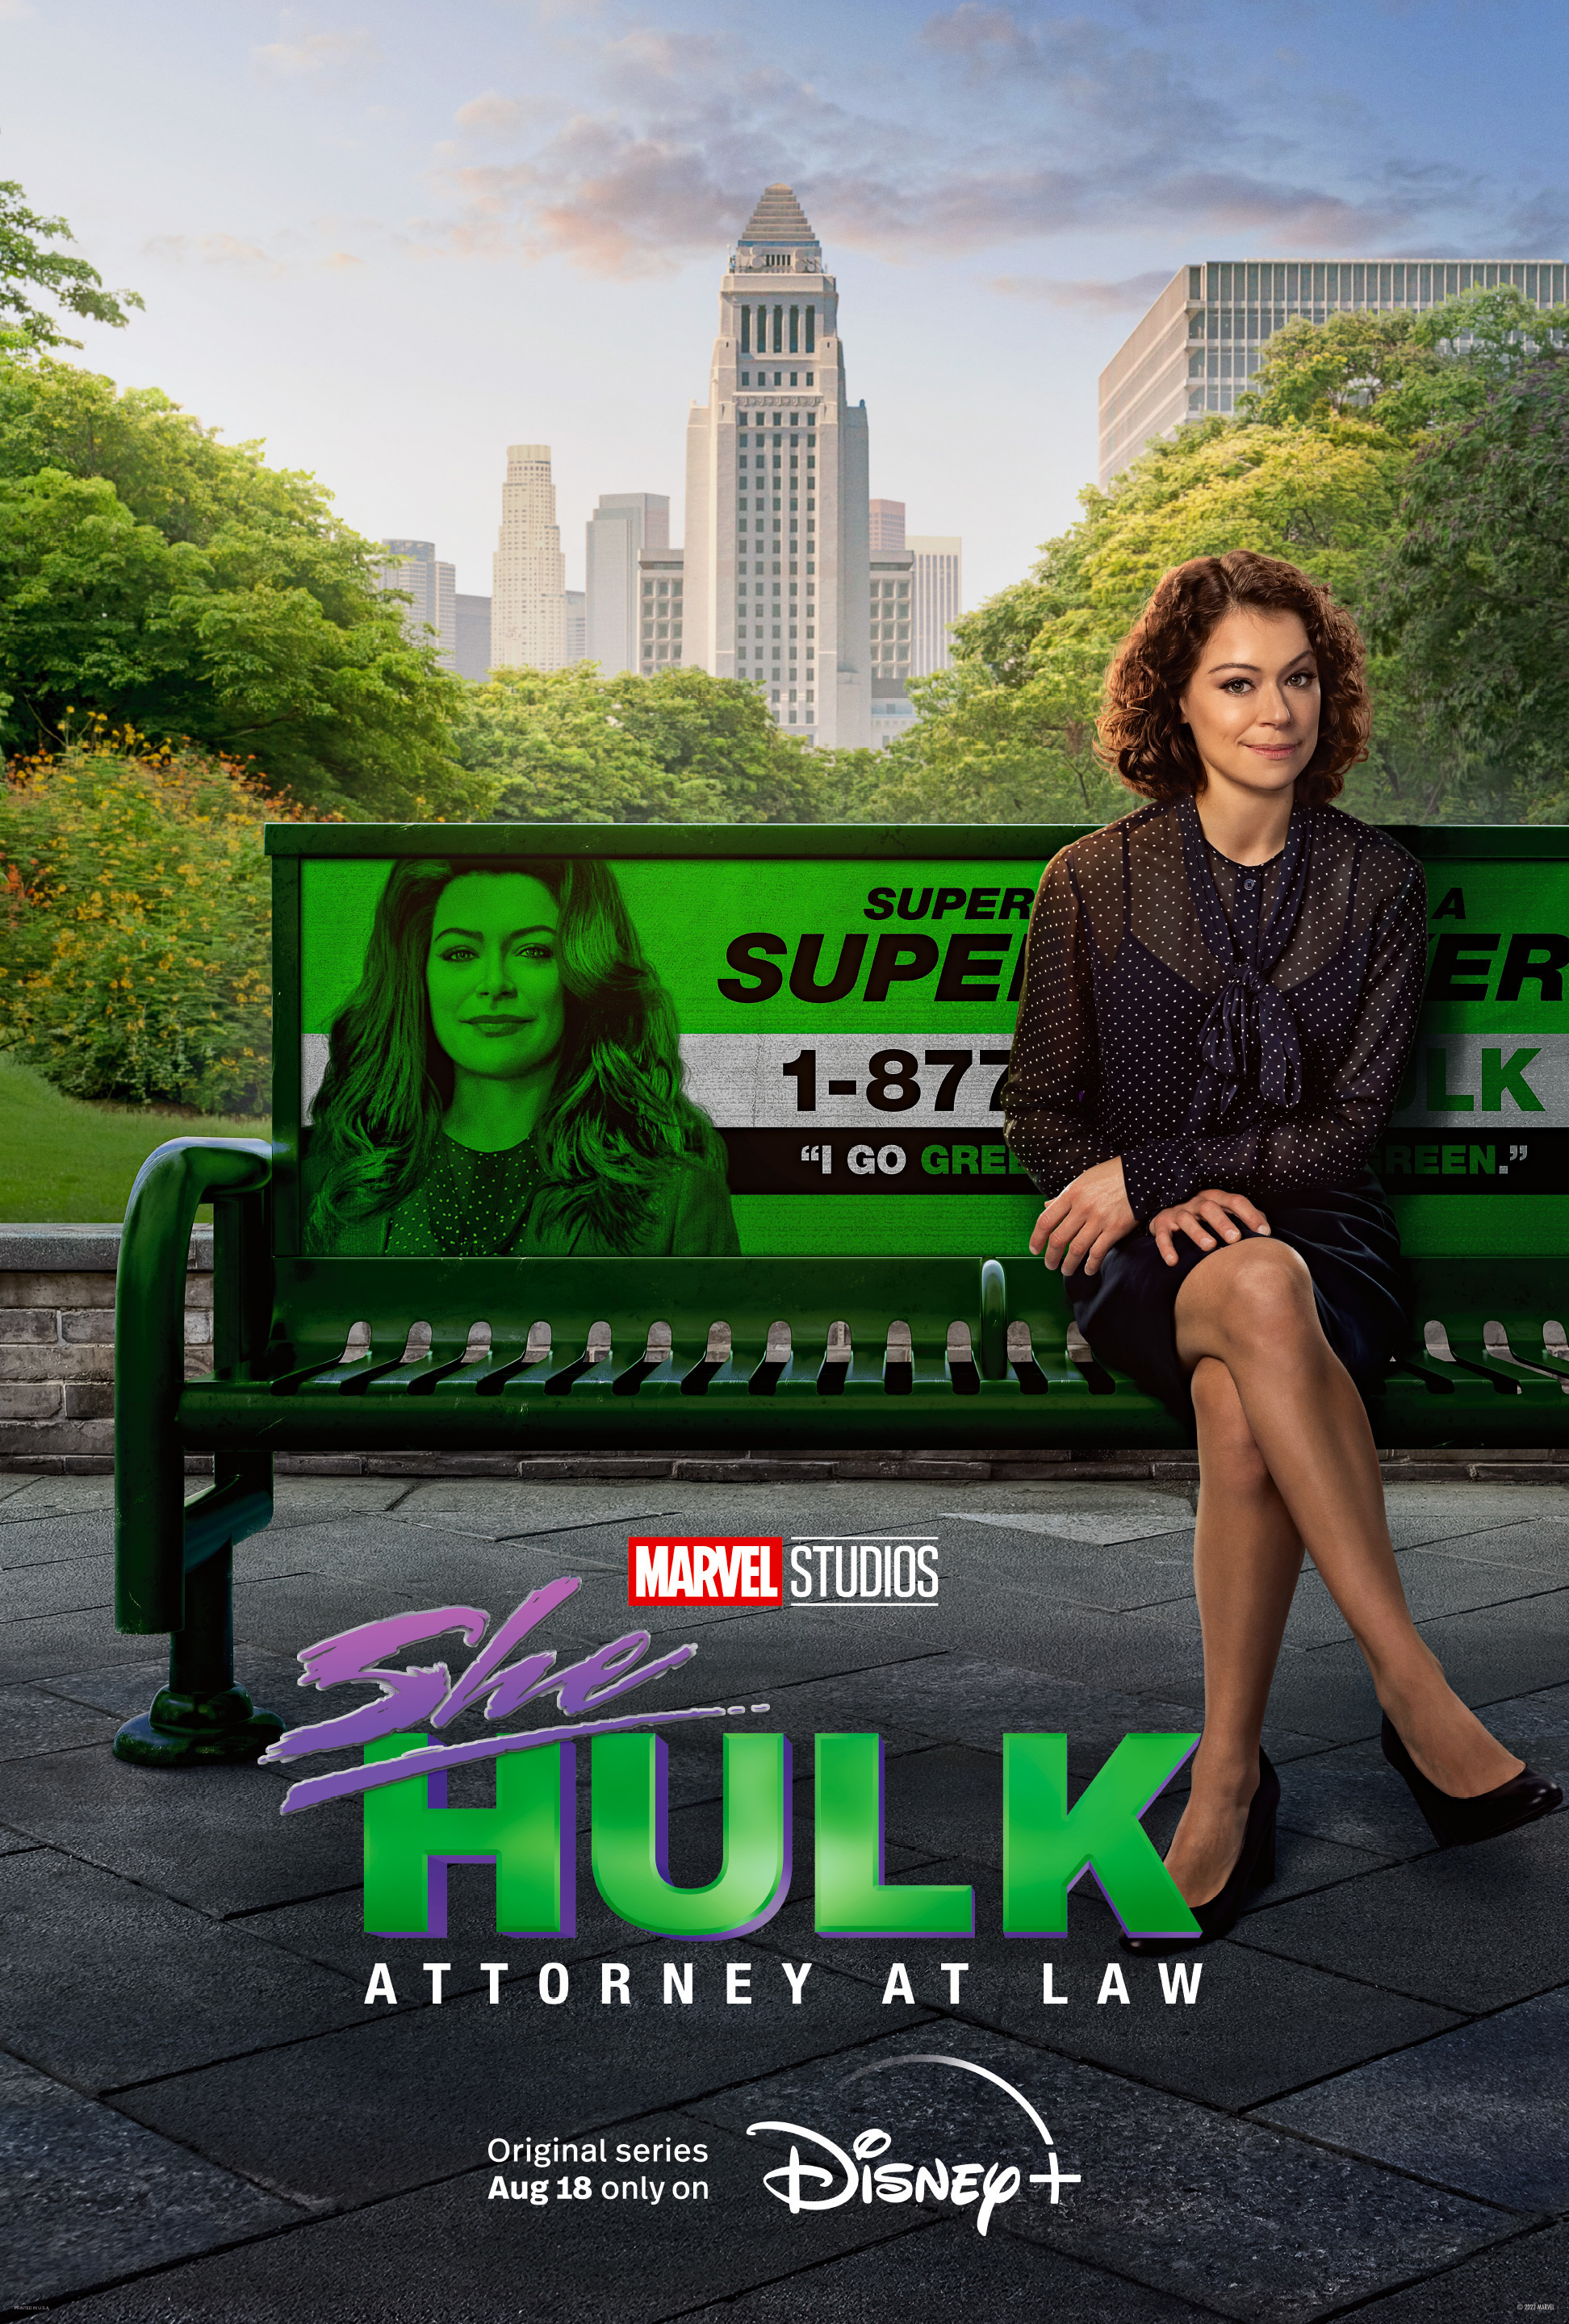 She Hulk: Attorney at Law on Disney+